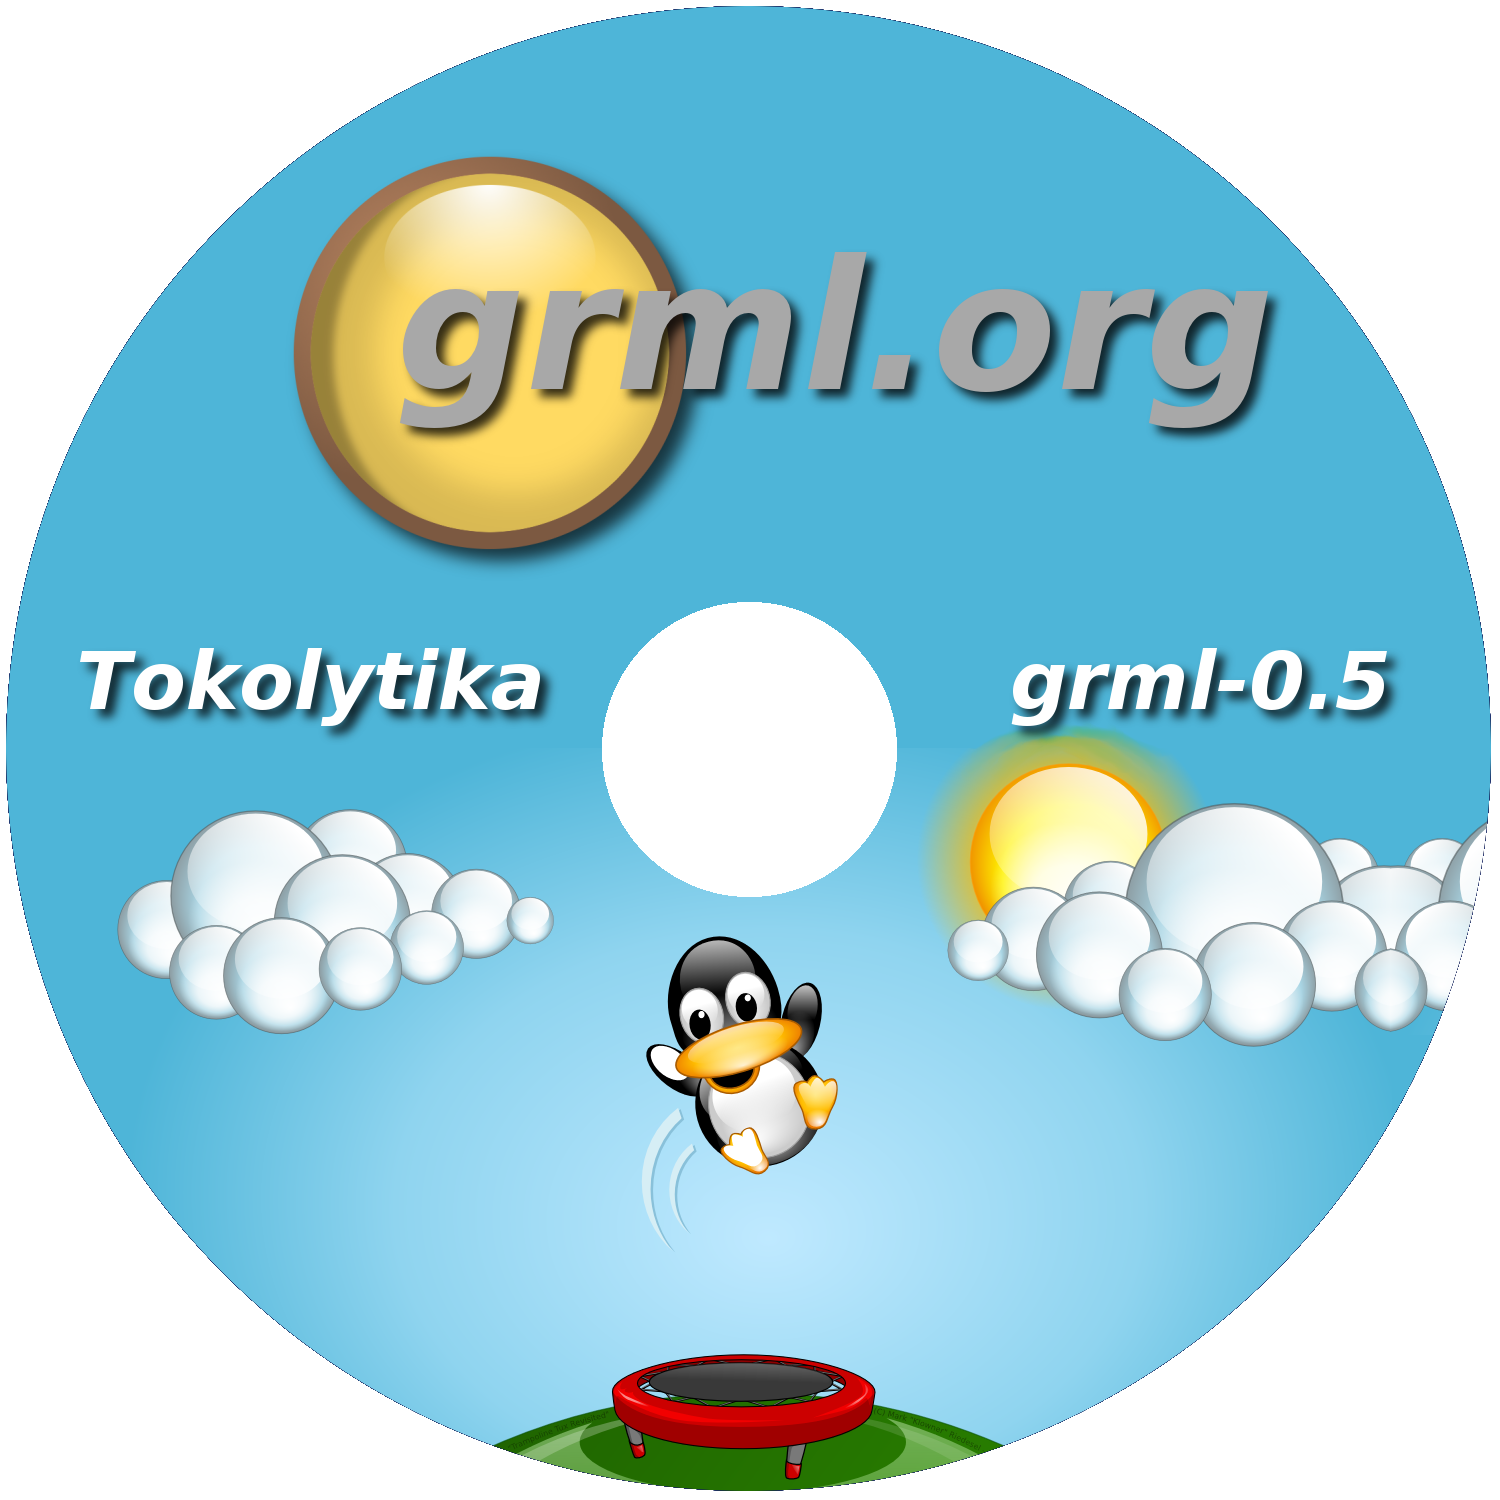 files/design/grml-0.5-tokolytika.png